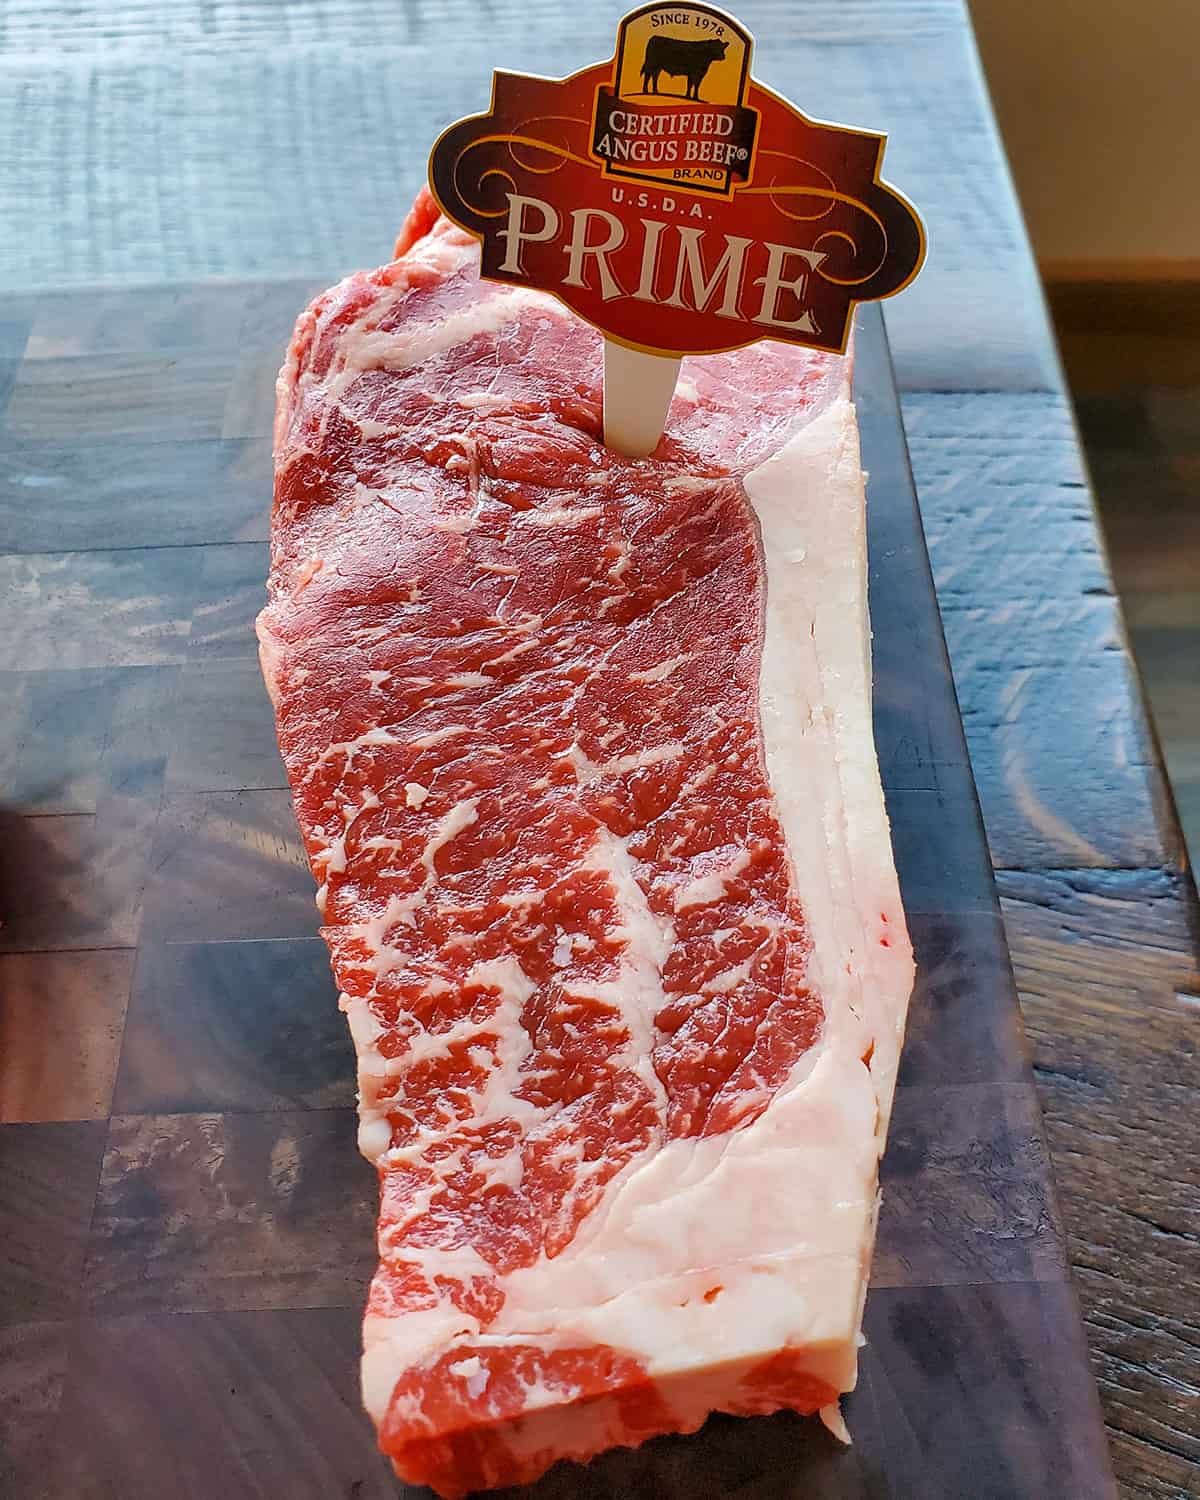 Certified Angus Beef brand prime ribeye with abundant marbling.